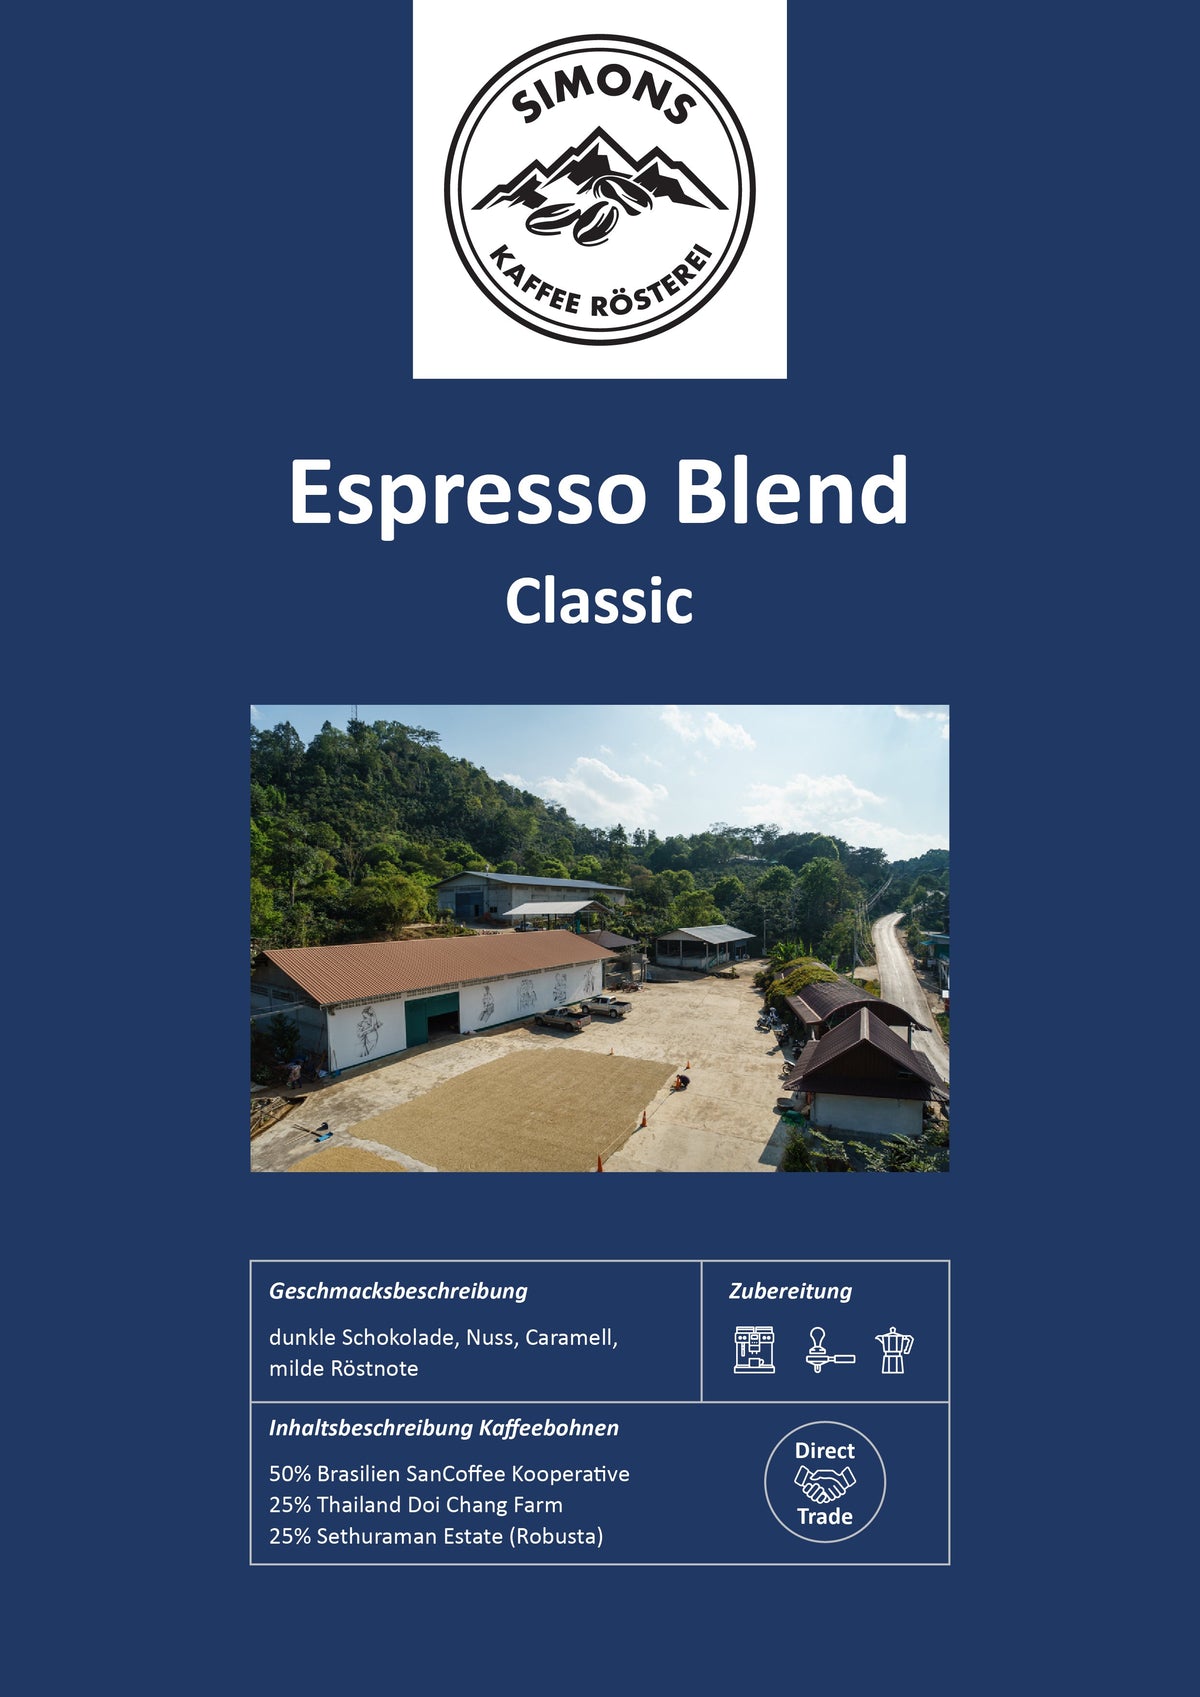 Details Classic Espresso Blend - Simons Kaffee Rösterei